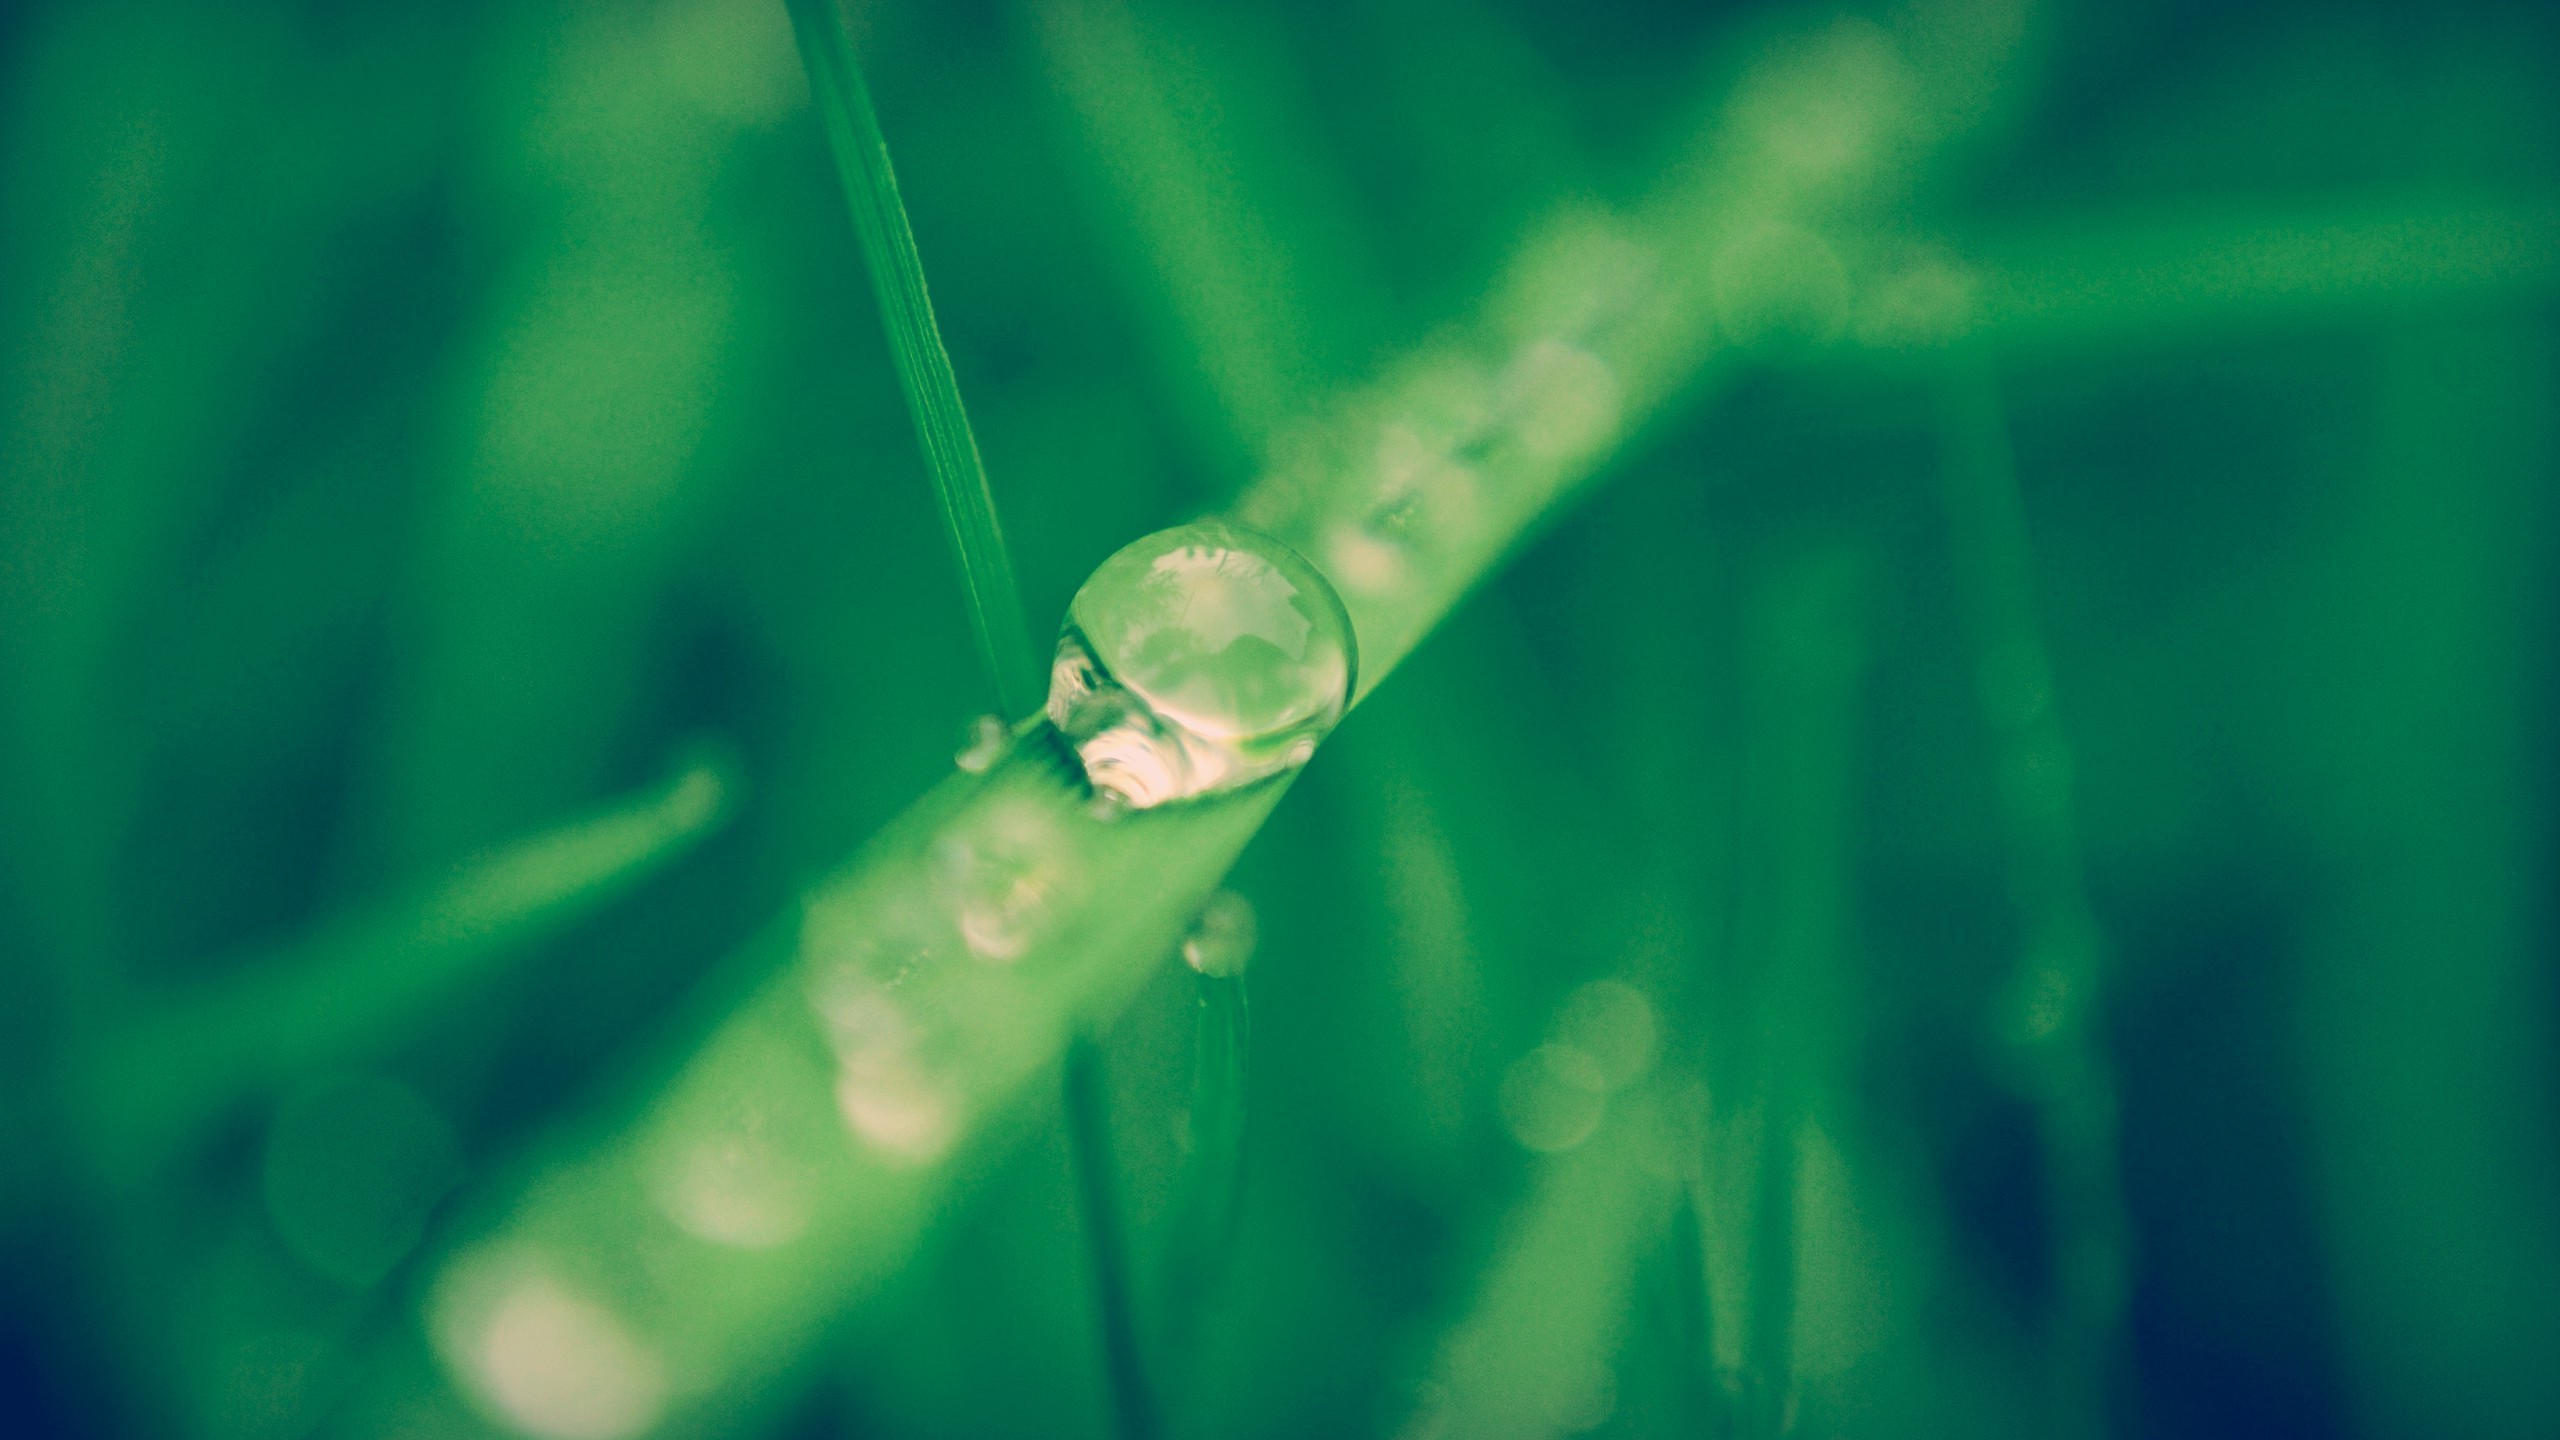 Green Plants Water Drops Macro Wallpapers Hd Desktop And Mobile